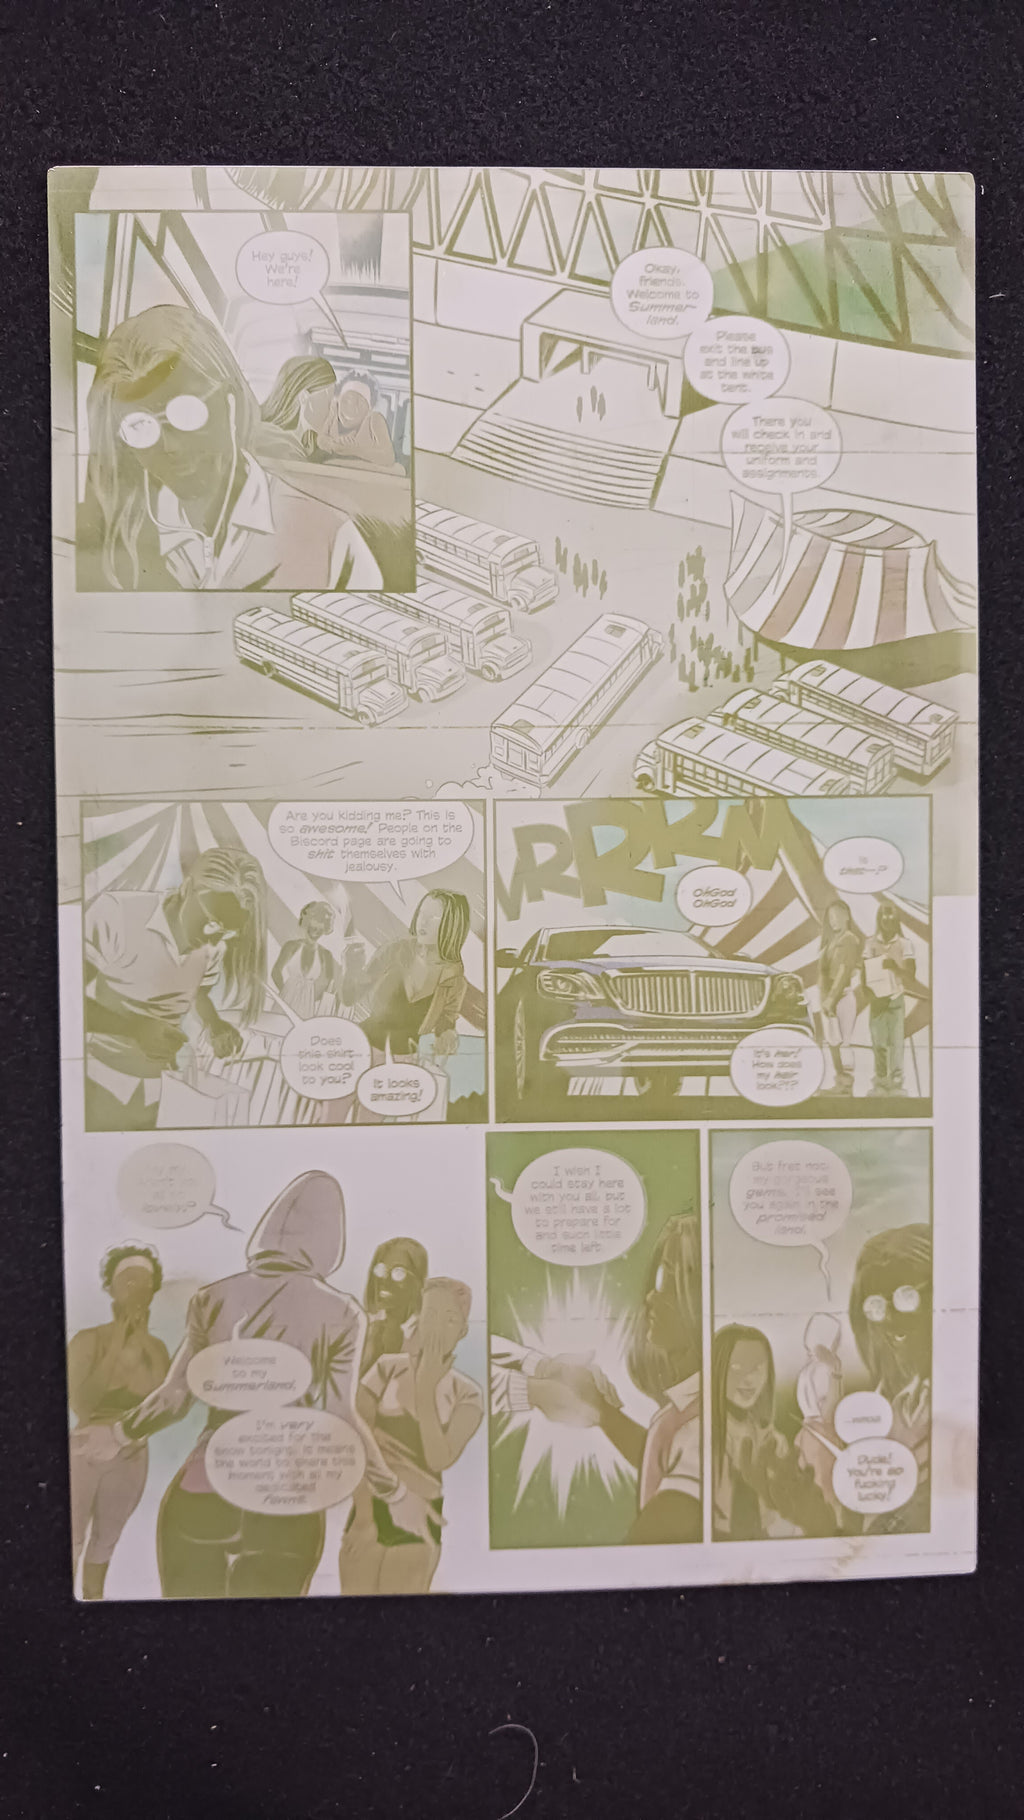 Killchella #2 - Page 13 - PRESSWORKS - Comic Art - Printer Plate - Yellow